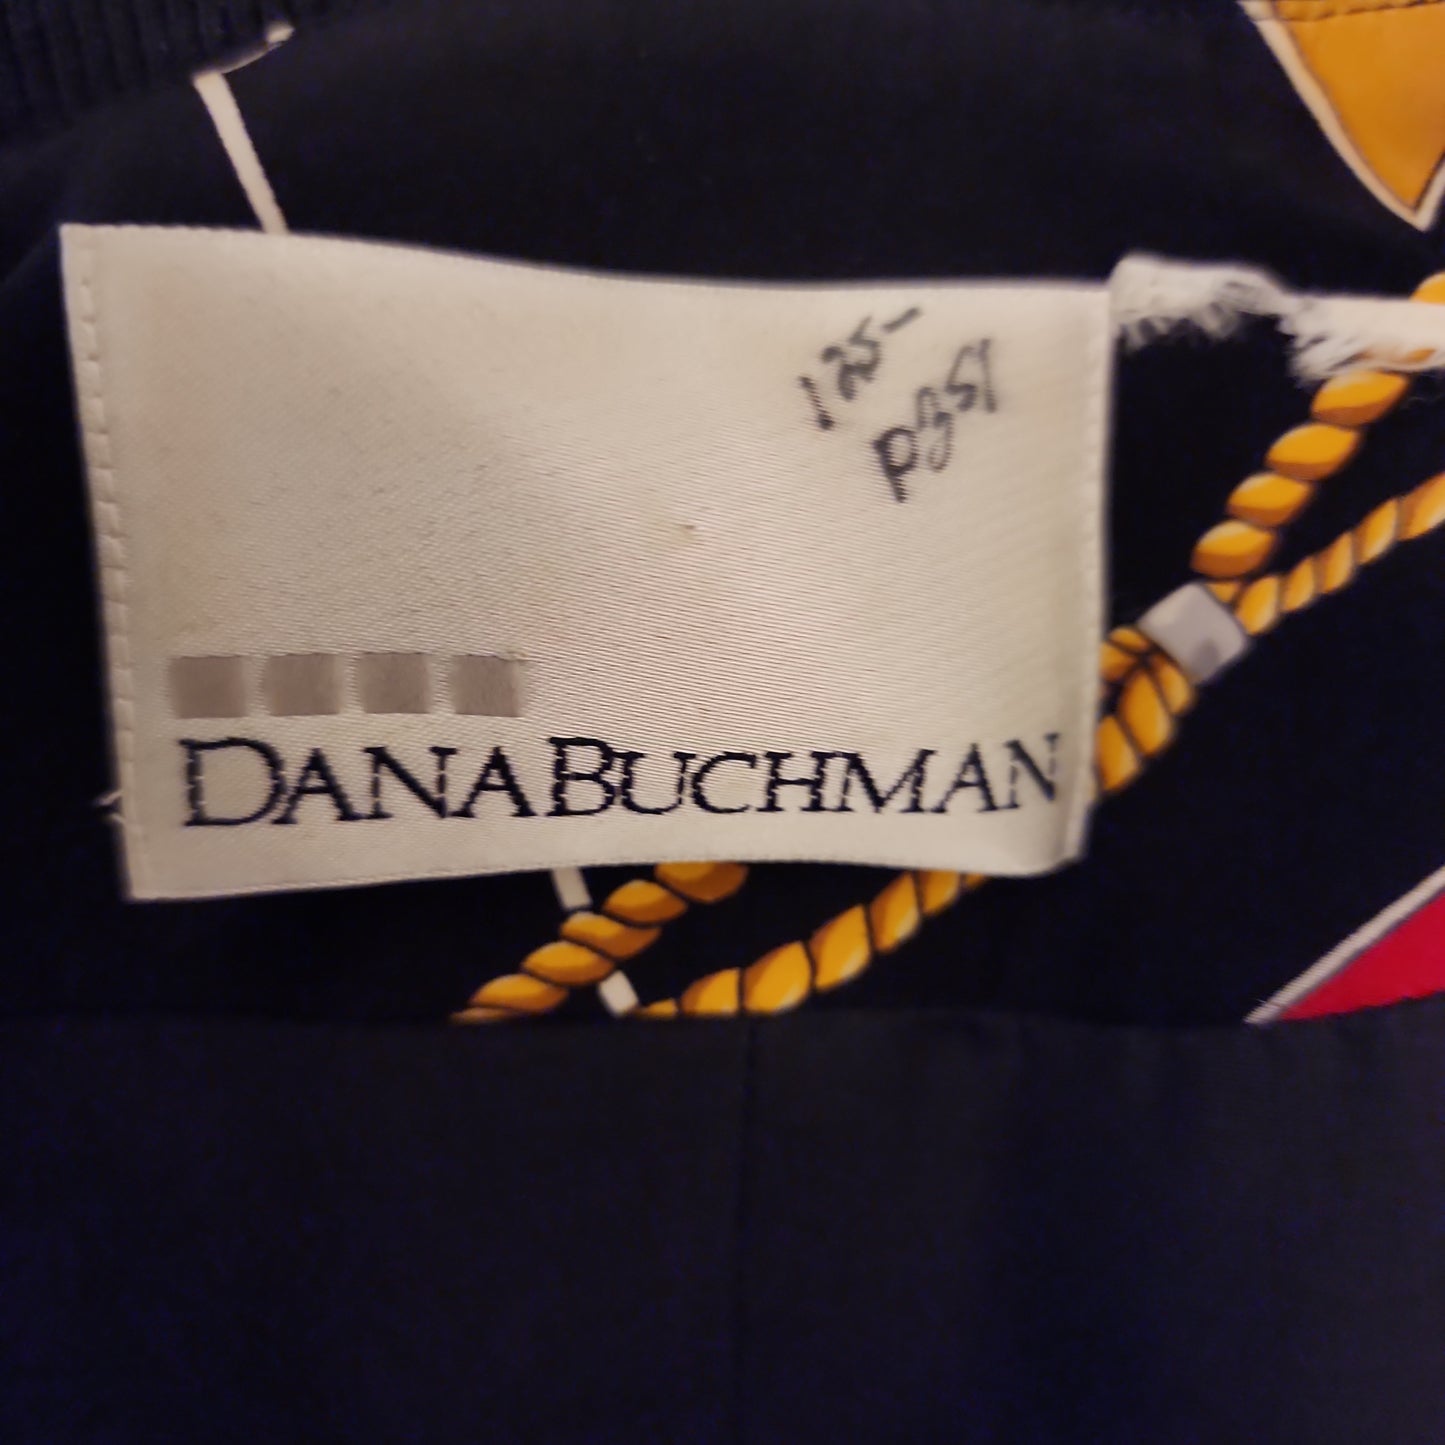 90s Colorful Graphic Silk Print Jacket Dana Buchman Large